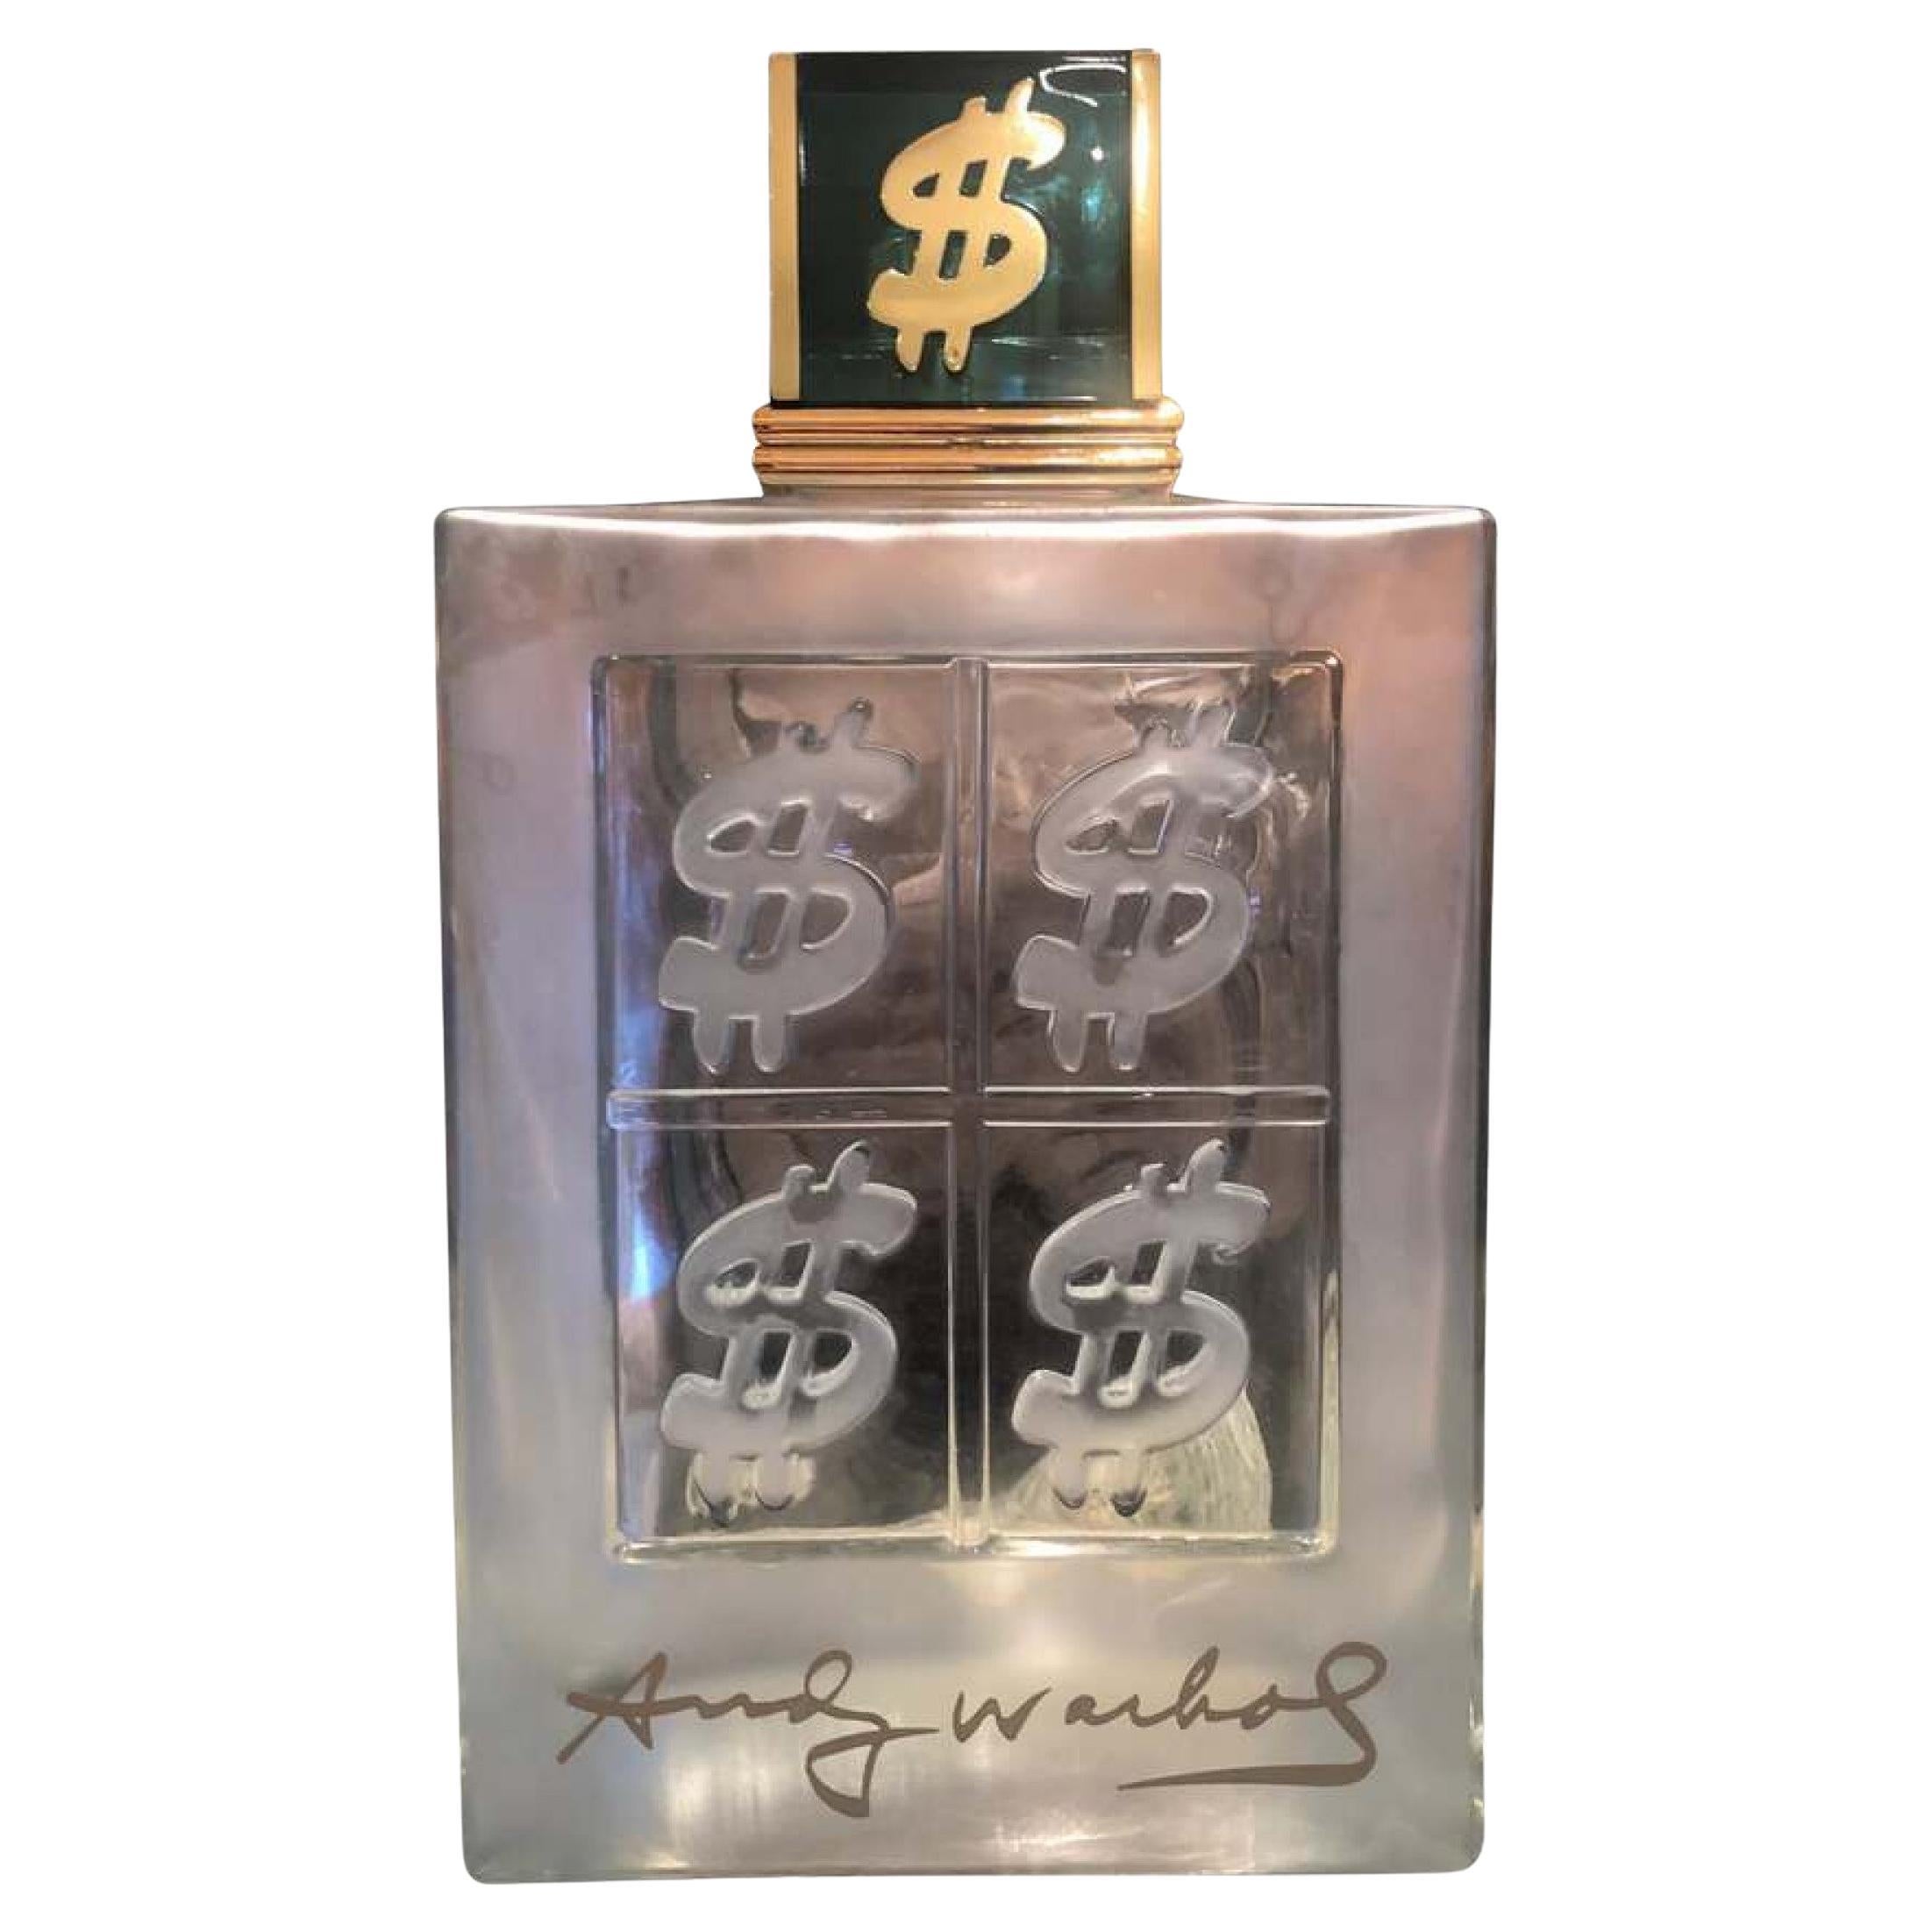 Andy Warhol Modern Oversized Dollar Sign Design Glass Display Bottles For Sale